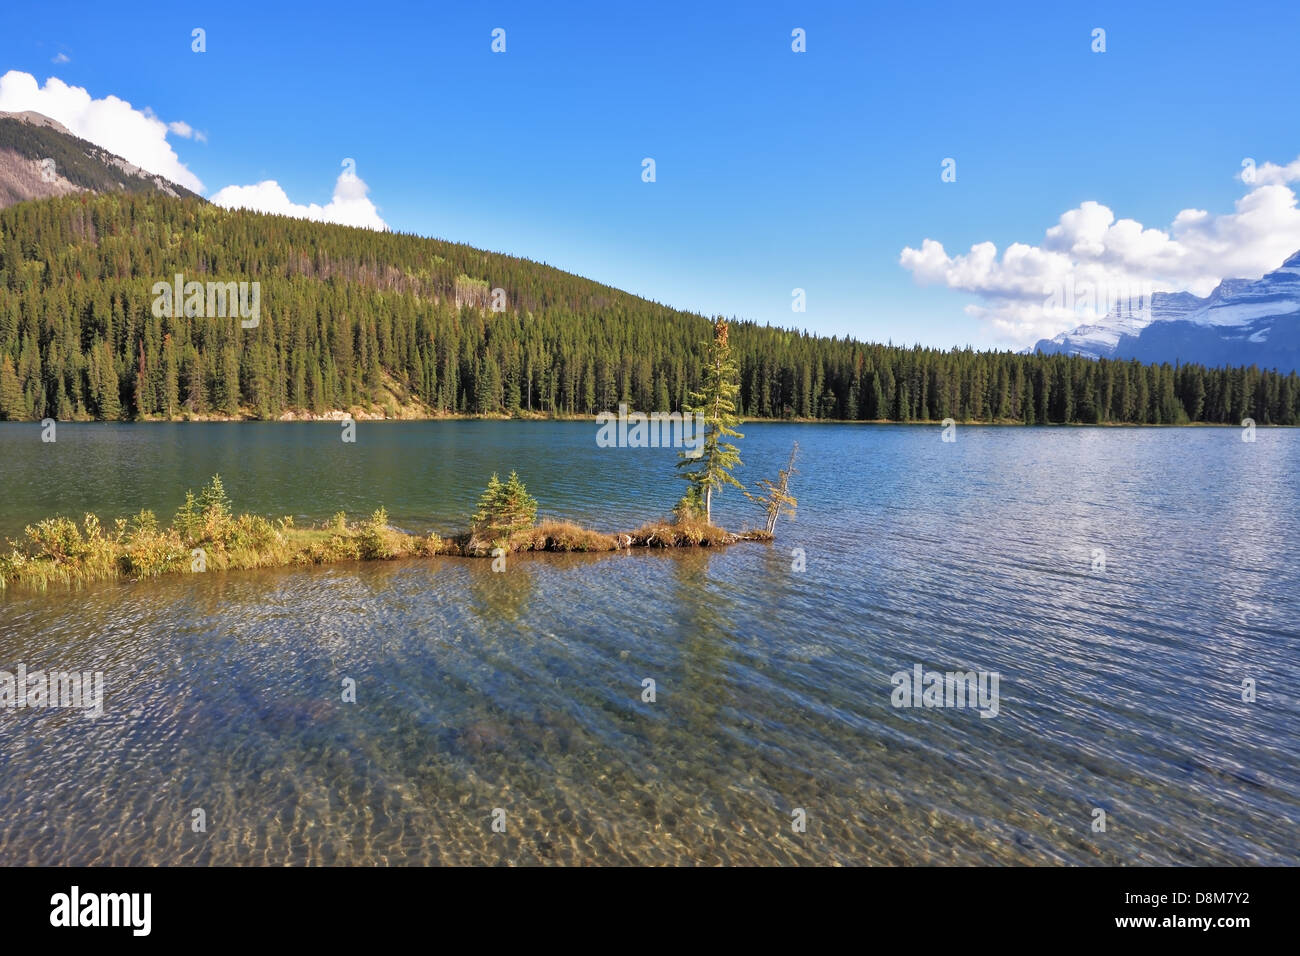 A tiny island in a lake coats Stock Photo